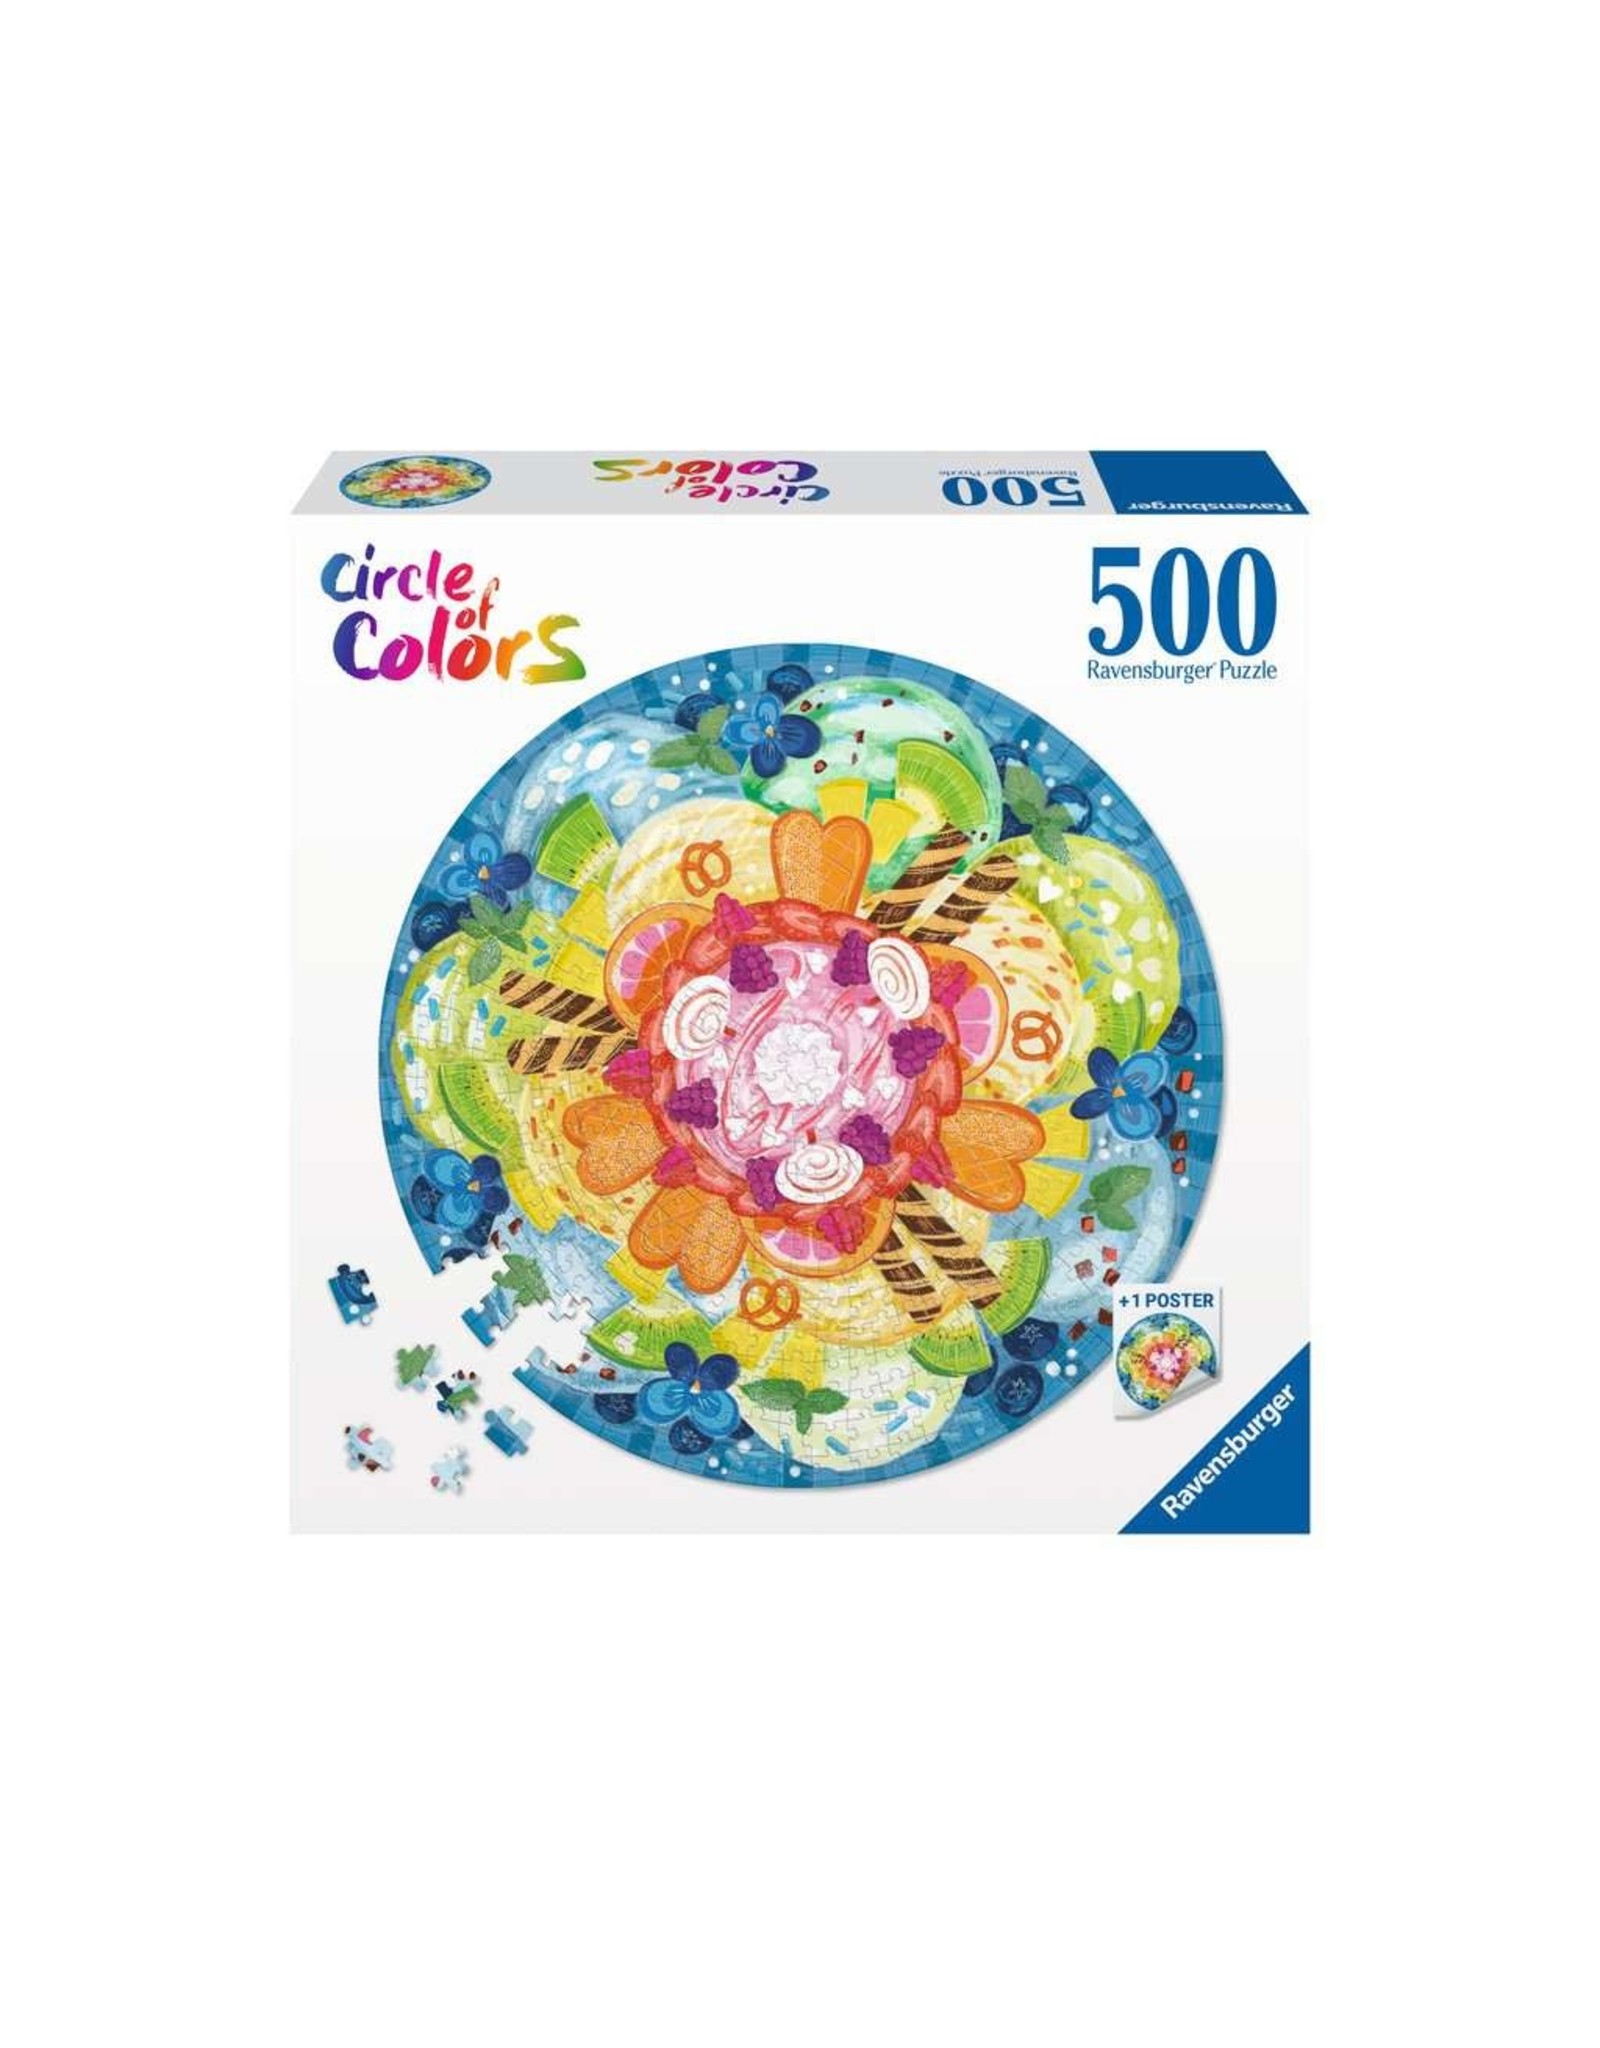 Ravensburger Circle of Colors: Ice Cream 500pc